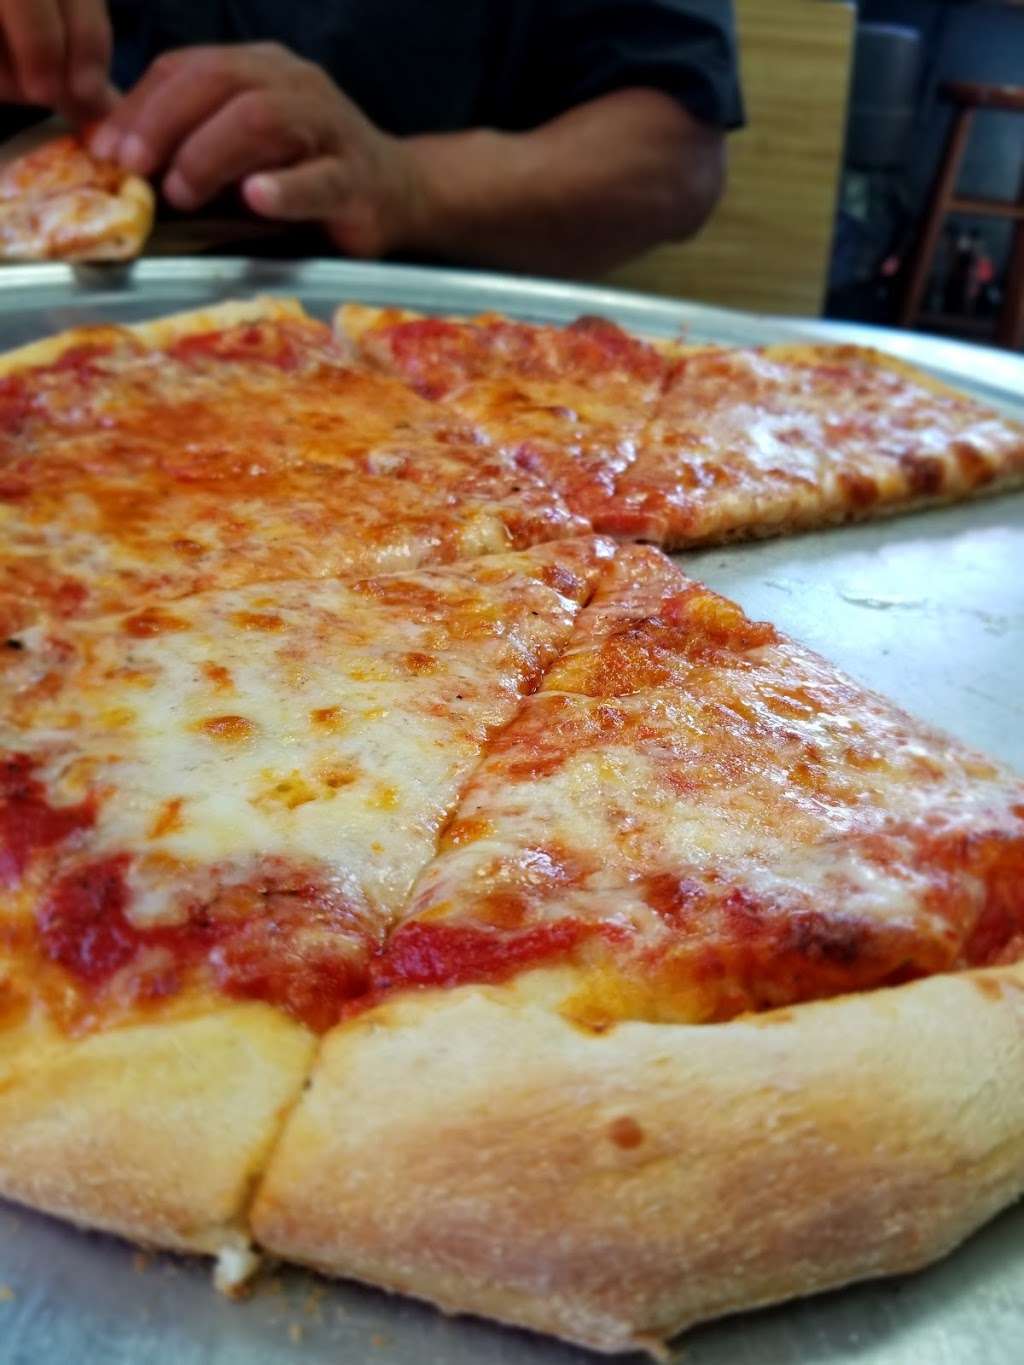 Pizza Pizza | 768 Warburton Ave, Yonkers, NY 10701 | Phone: (914) 968-5720